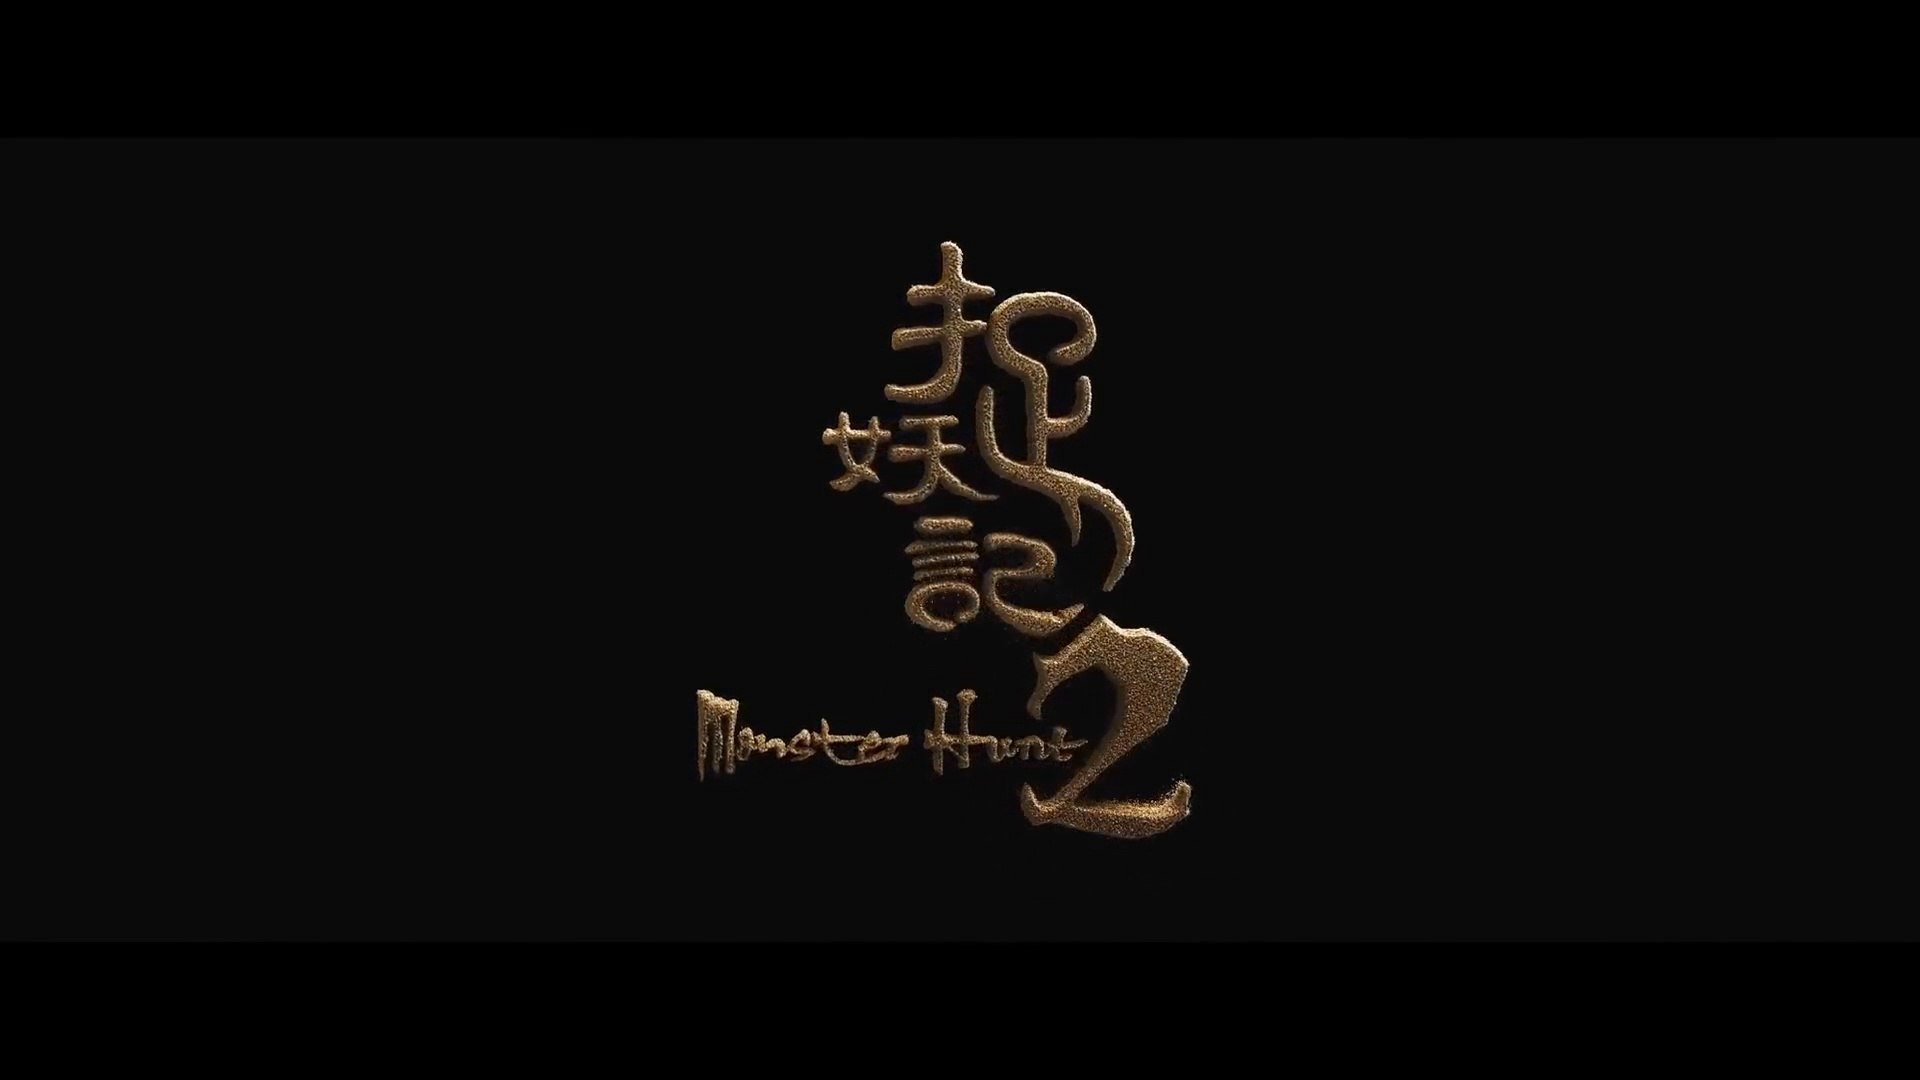 Monster Hunt 2 English Trailer (2018) HD 